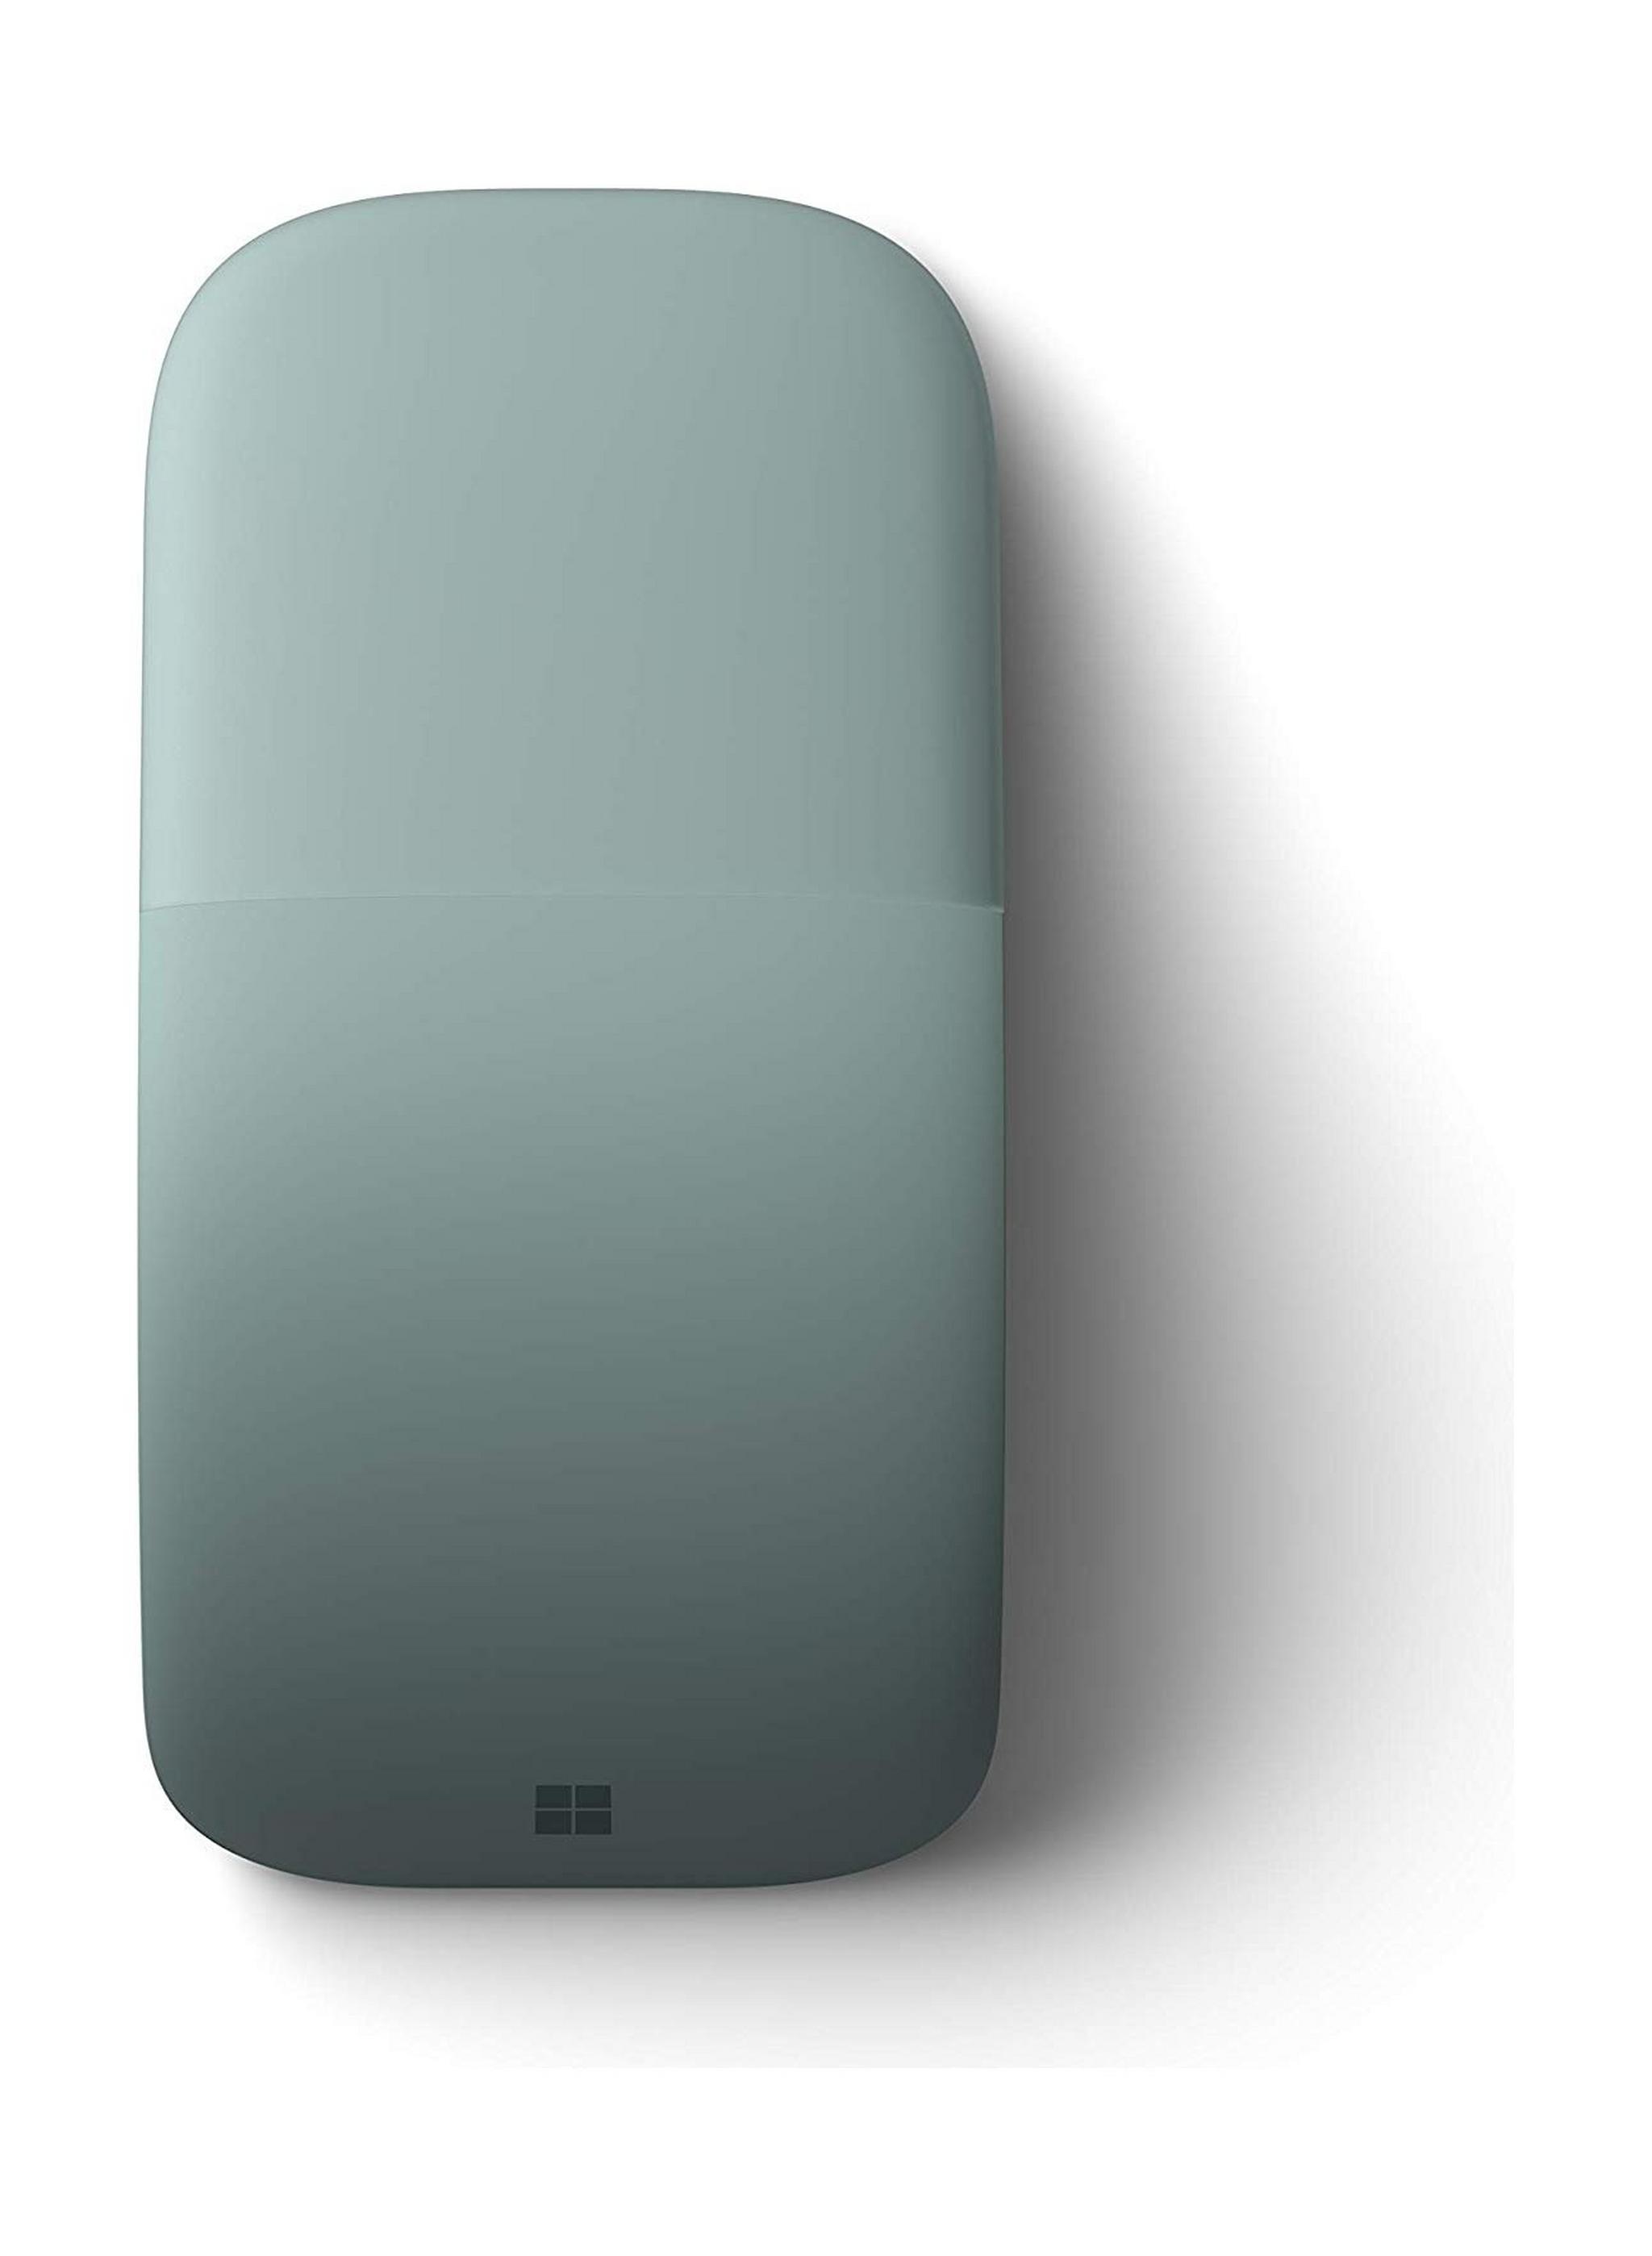 Microsoft ARC Wireless Mouse - Sage Green